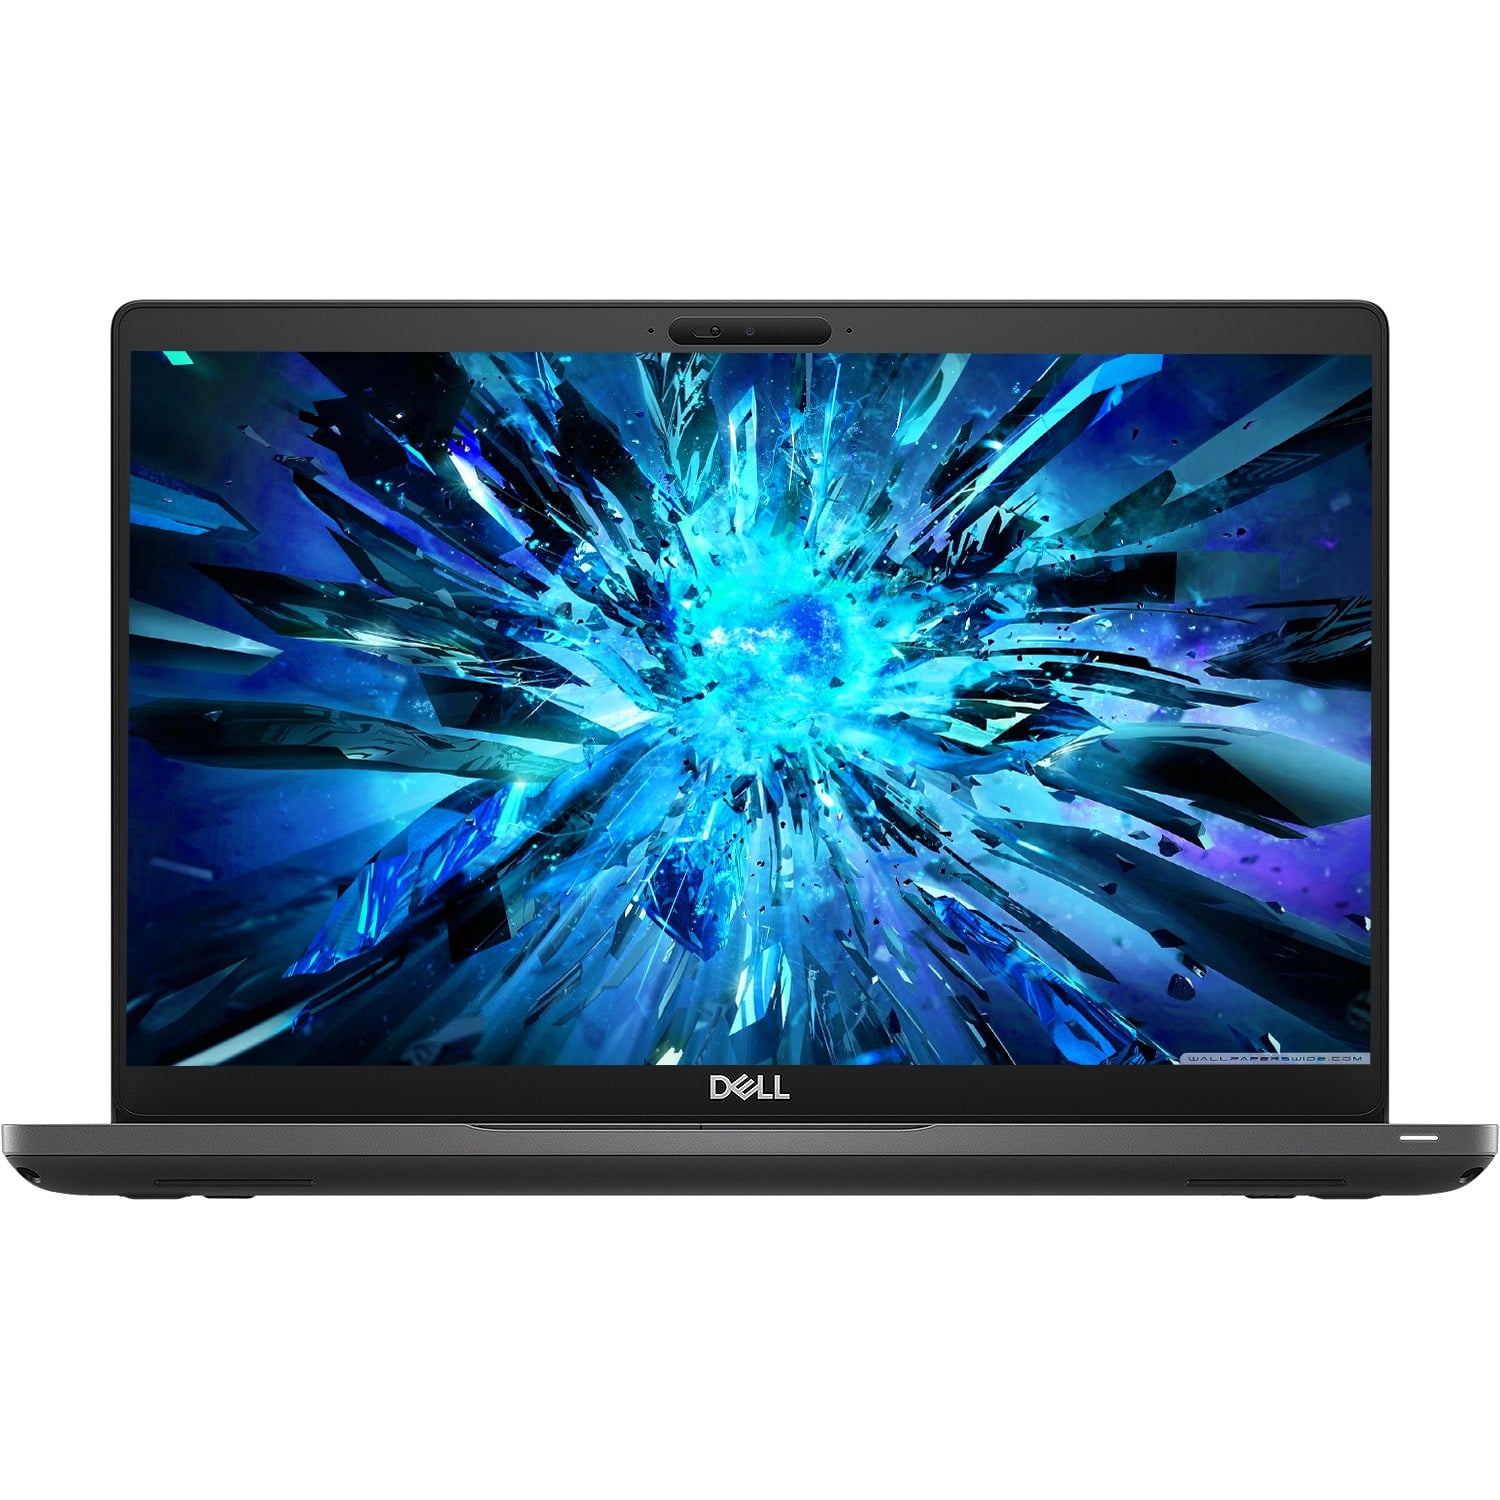 Dell Inspiron 14 5401 Business Laptop, Intel Core i5-10th Generation CPU,  8GB RAM, 256GB SSD , 14 inch Display, Windows 10 Pro, Refurbished Laptop